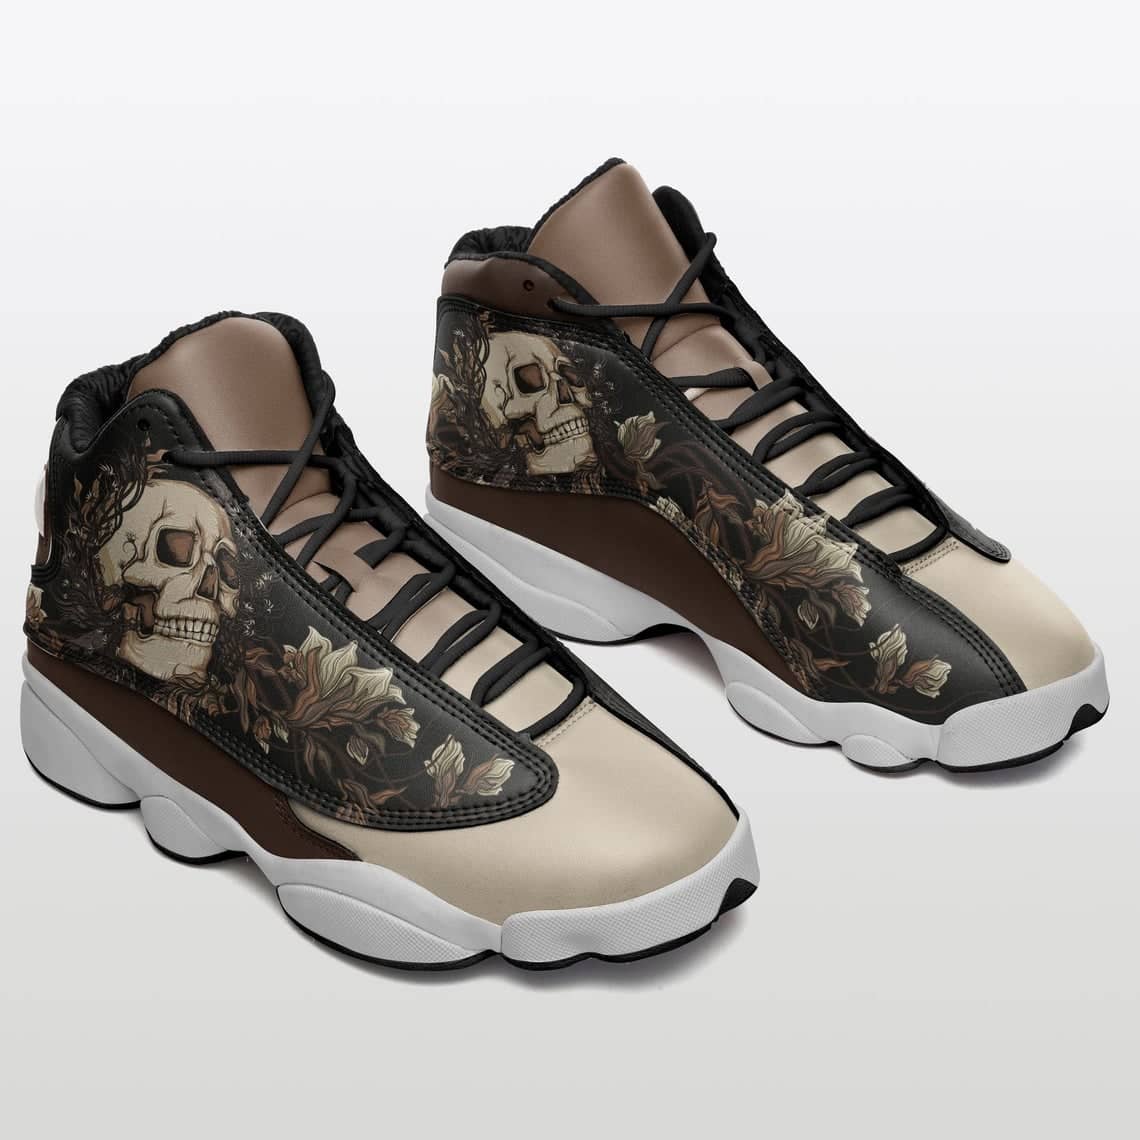 Skull Sku 32 Air Jordan Shoes